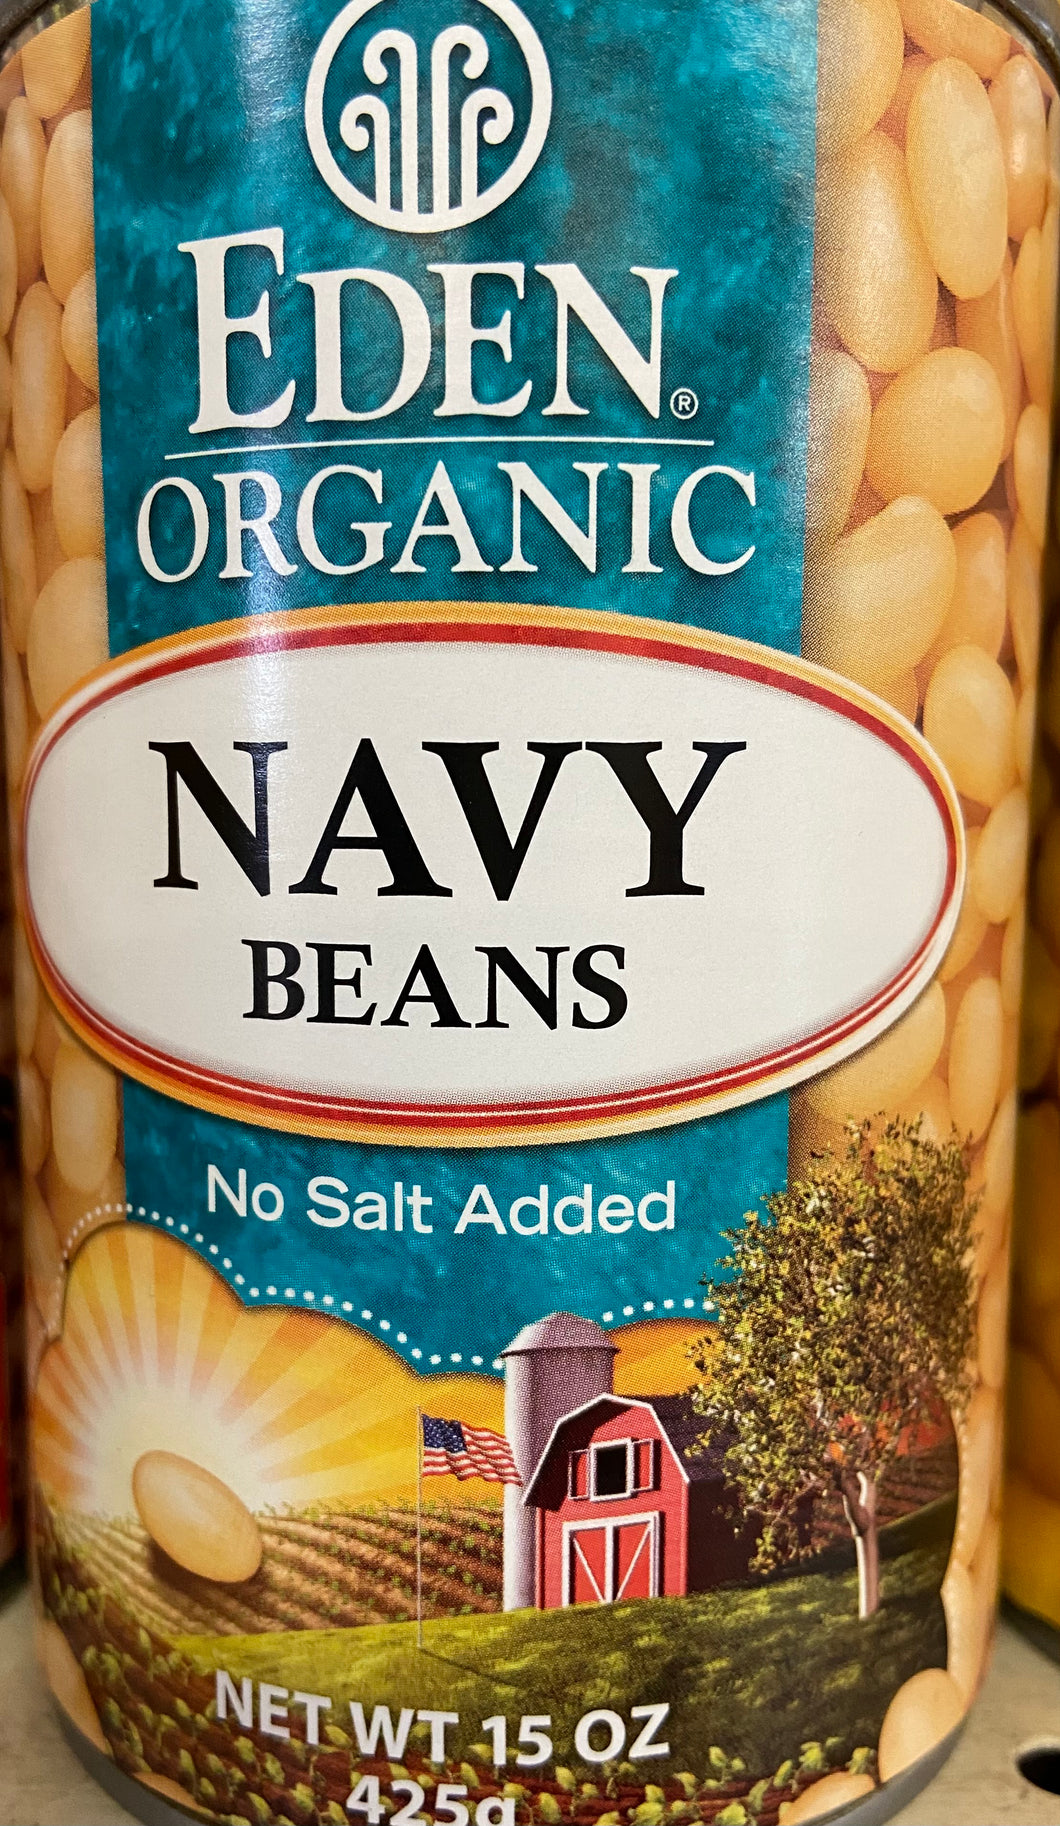 Beans Canned, Navy, Eden Organic